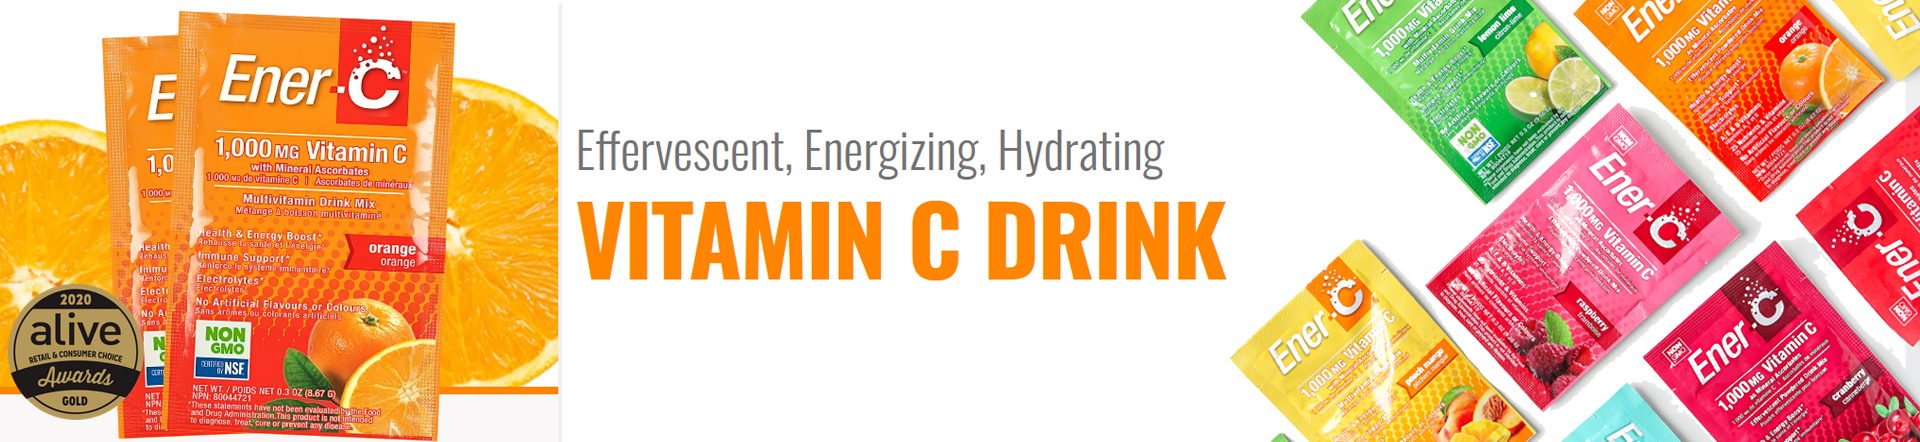 Ener-C Vitamin C Drink